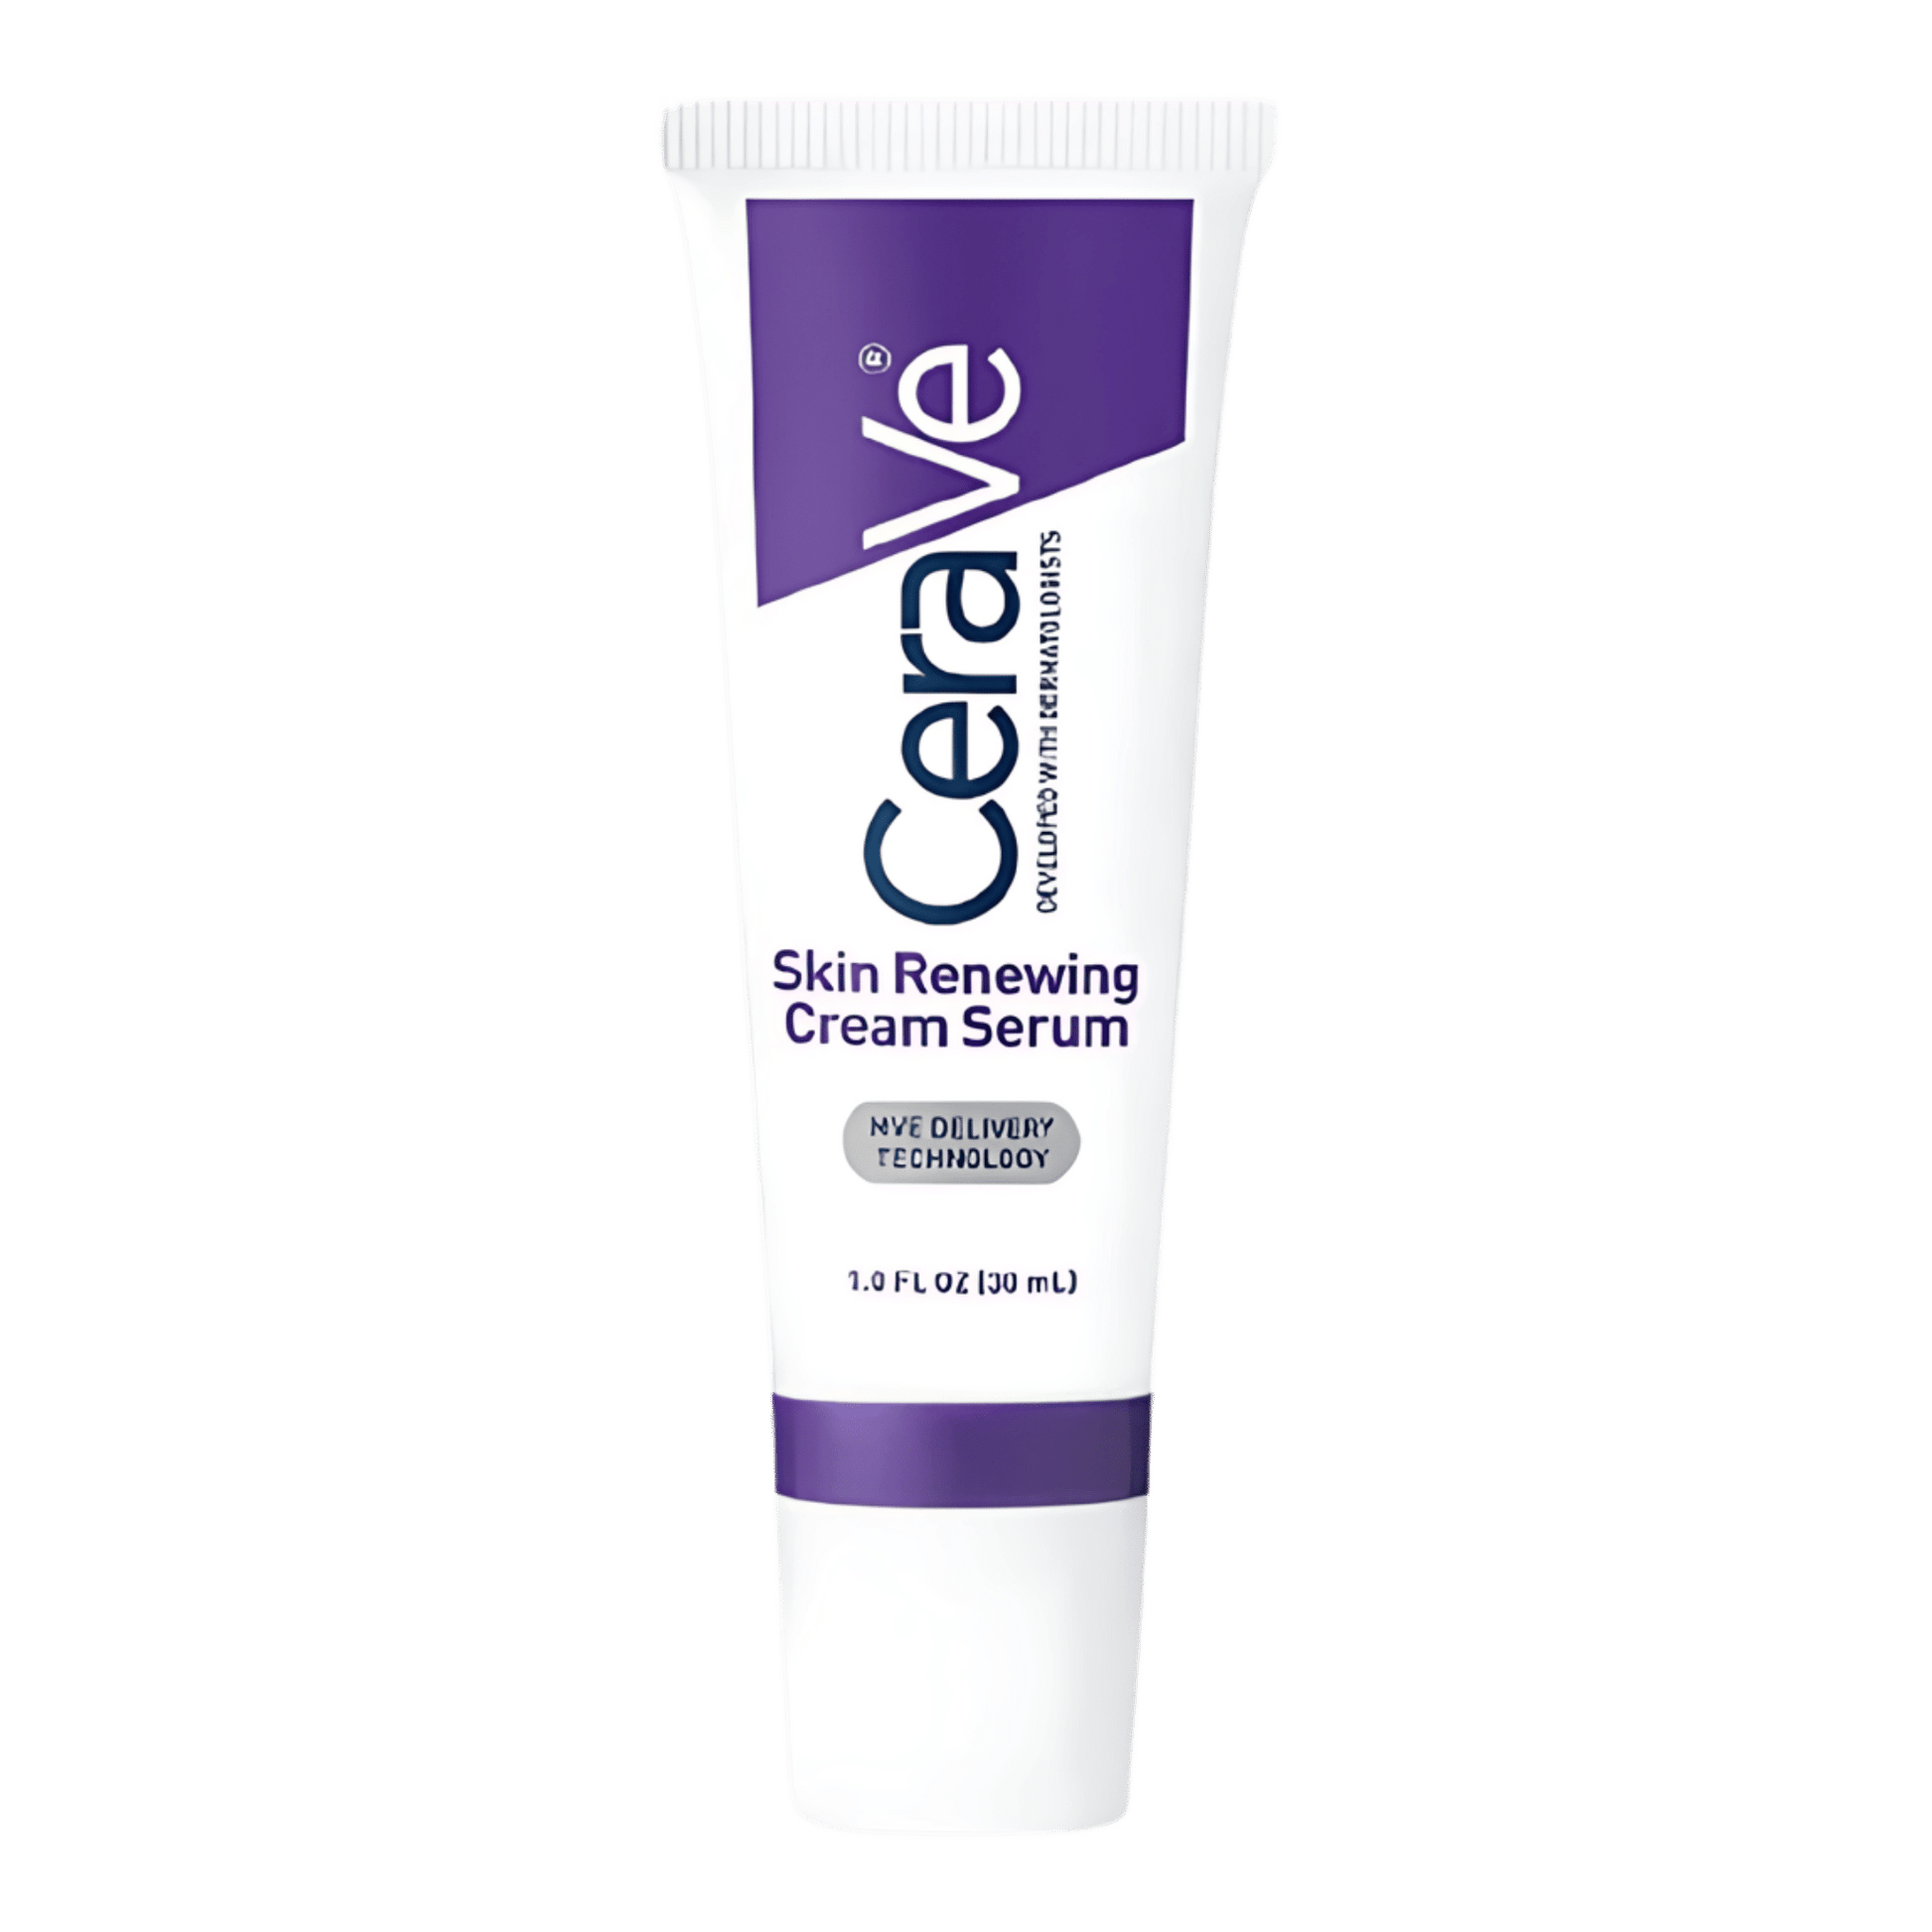 Buy CeraVe Skin Renewing Cream Serum Online In Pakistan!